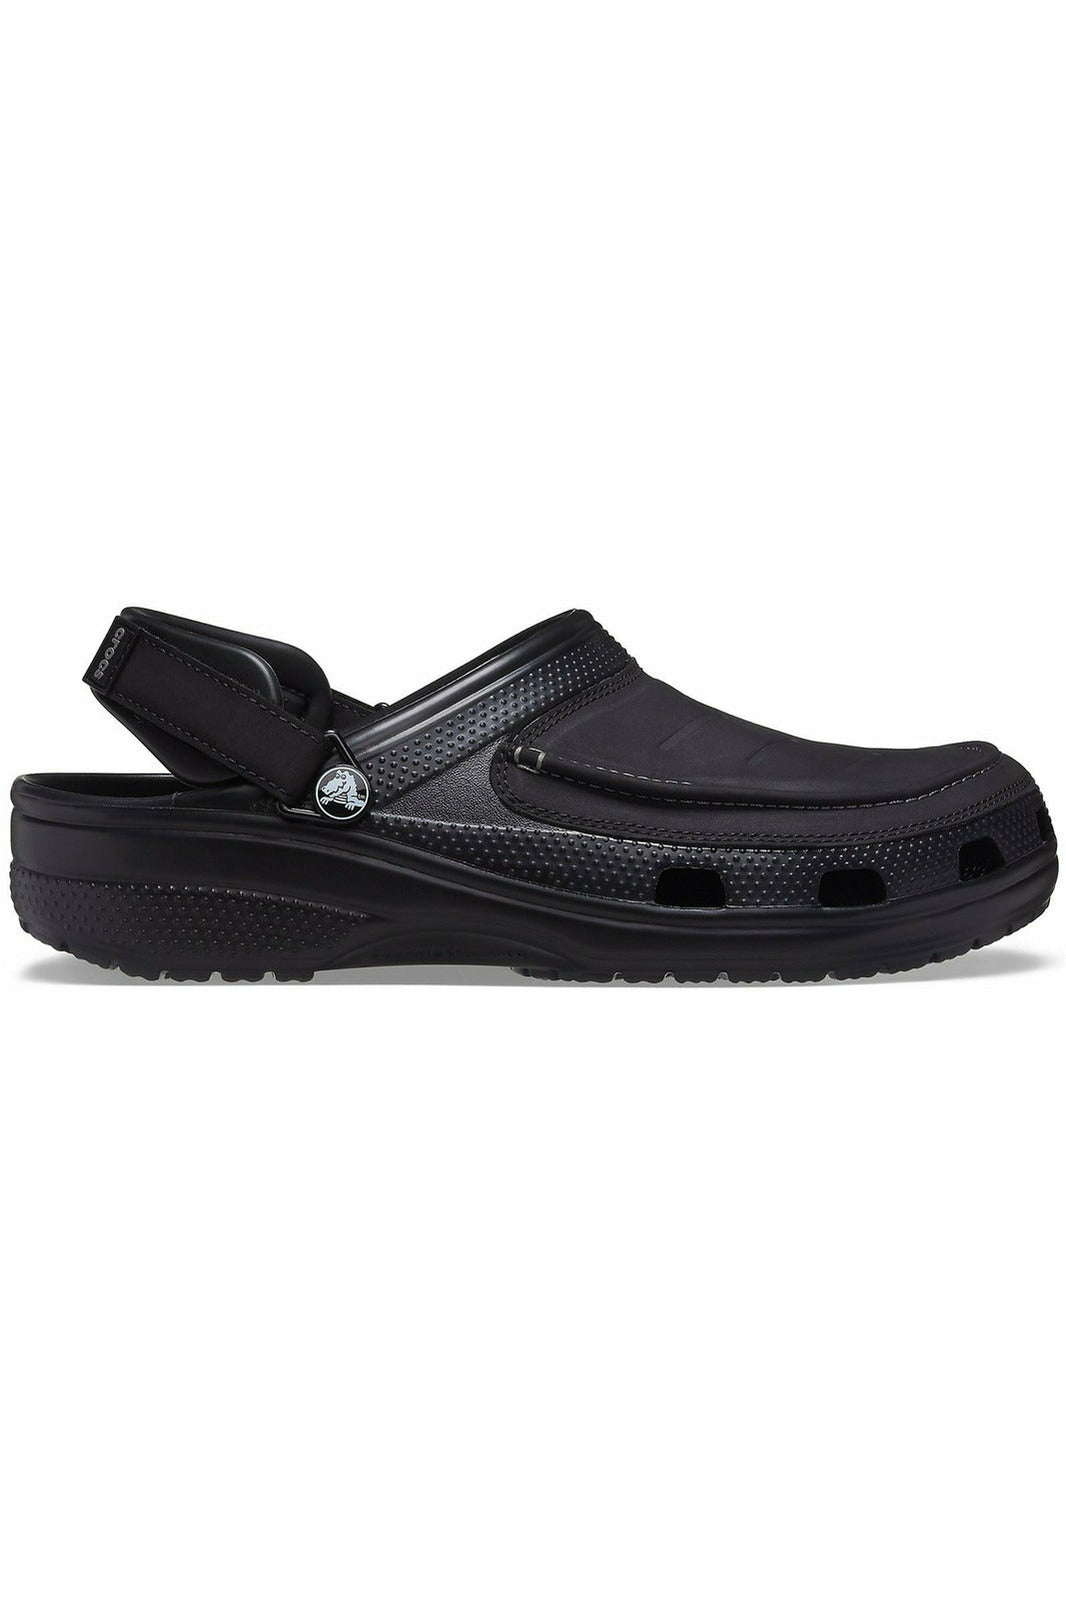 Crocs - Yukon Vista II Black Beach Shoes